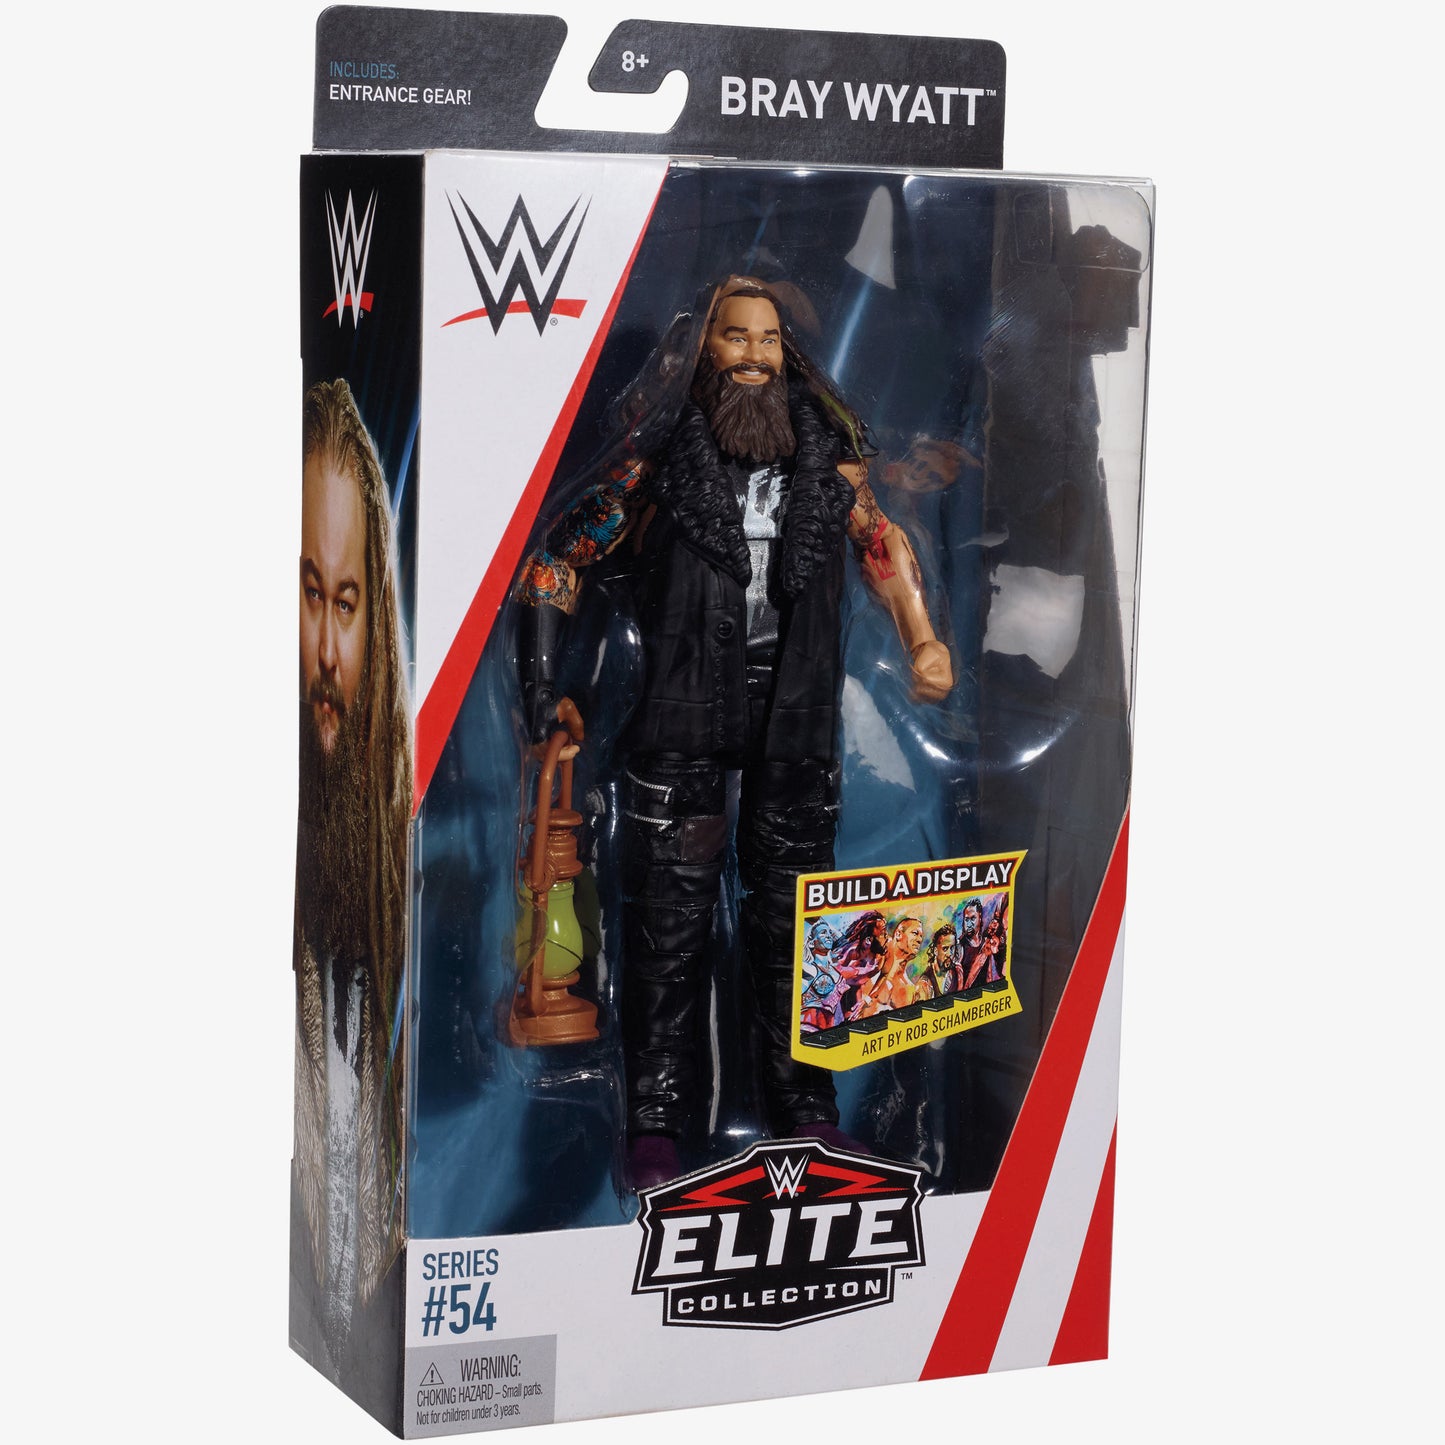 Bray Wyatt WWE Elite Collection Series #54